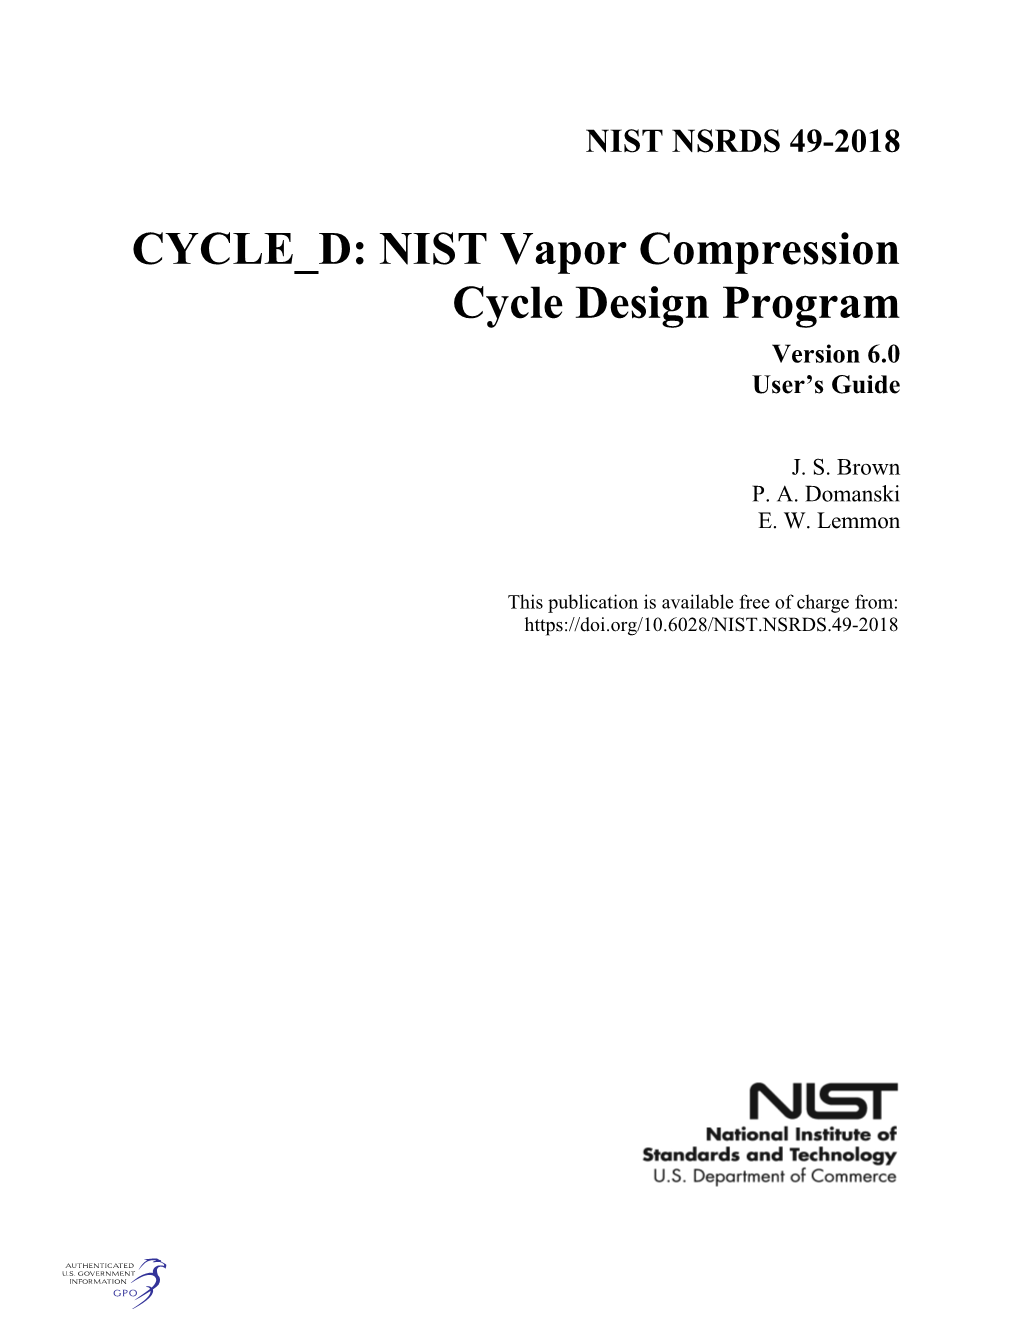 CYCLE D: NIST Vapor Compression Cycle Design Program Version 6.0 User’S Guide